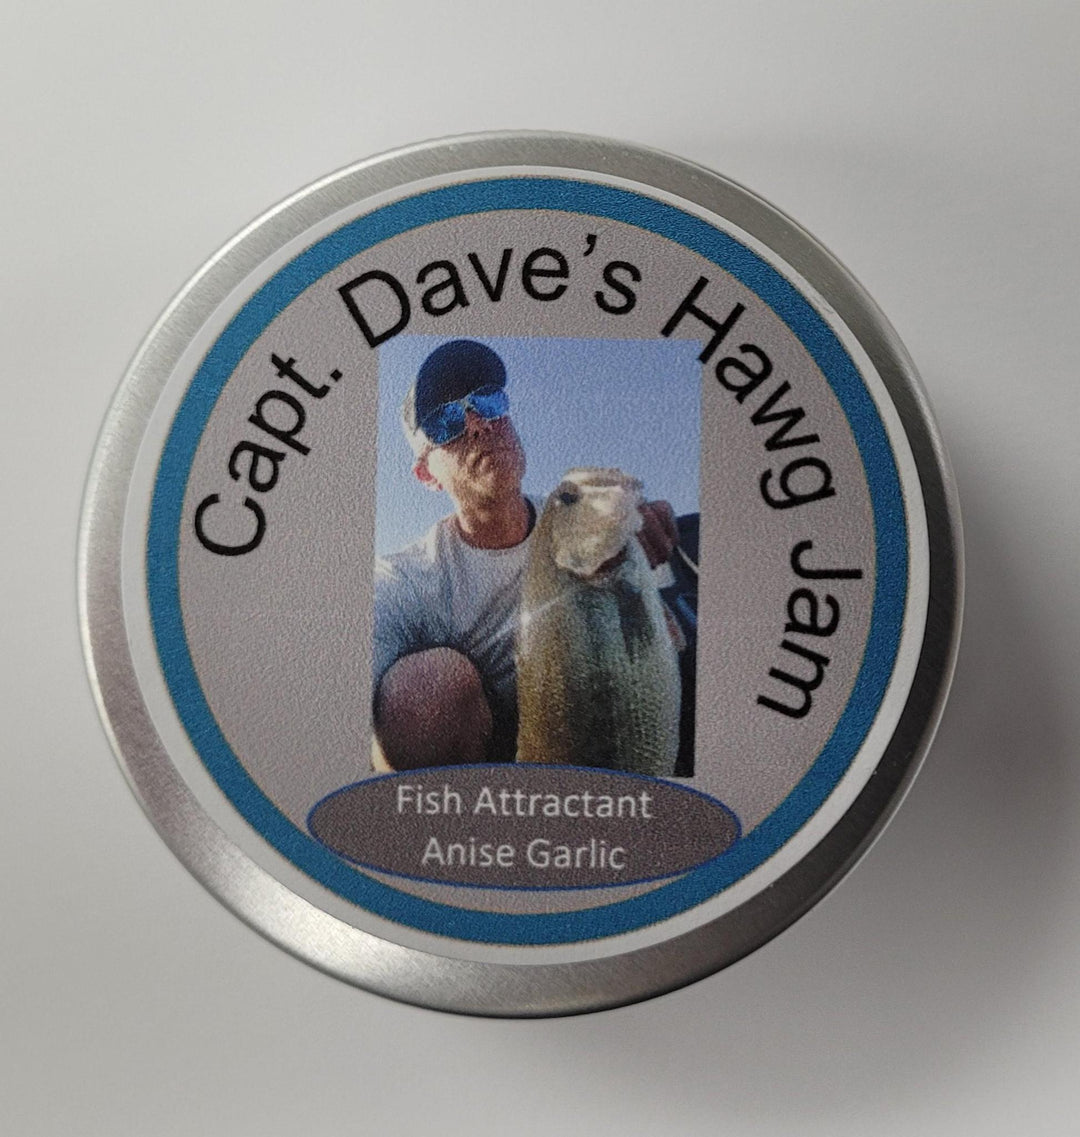 Capt. Dave's Hawg Jam Tin Fish Attractant